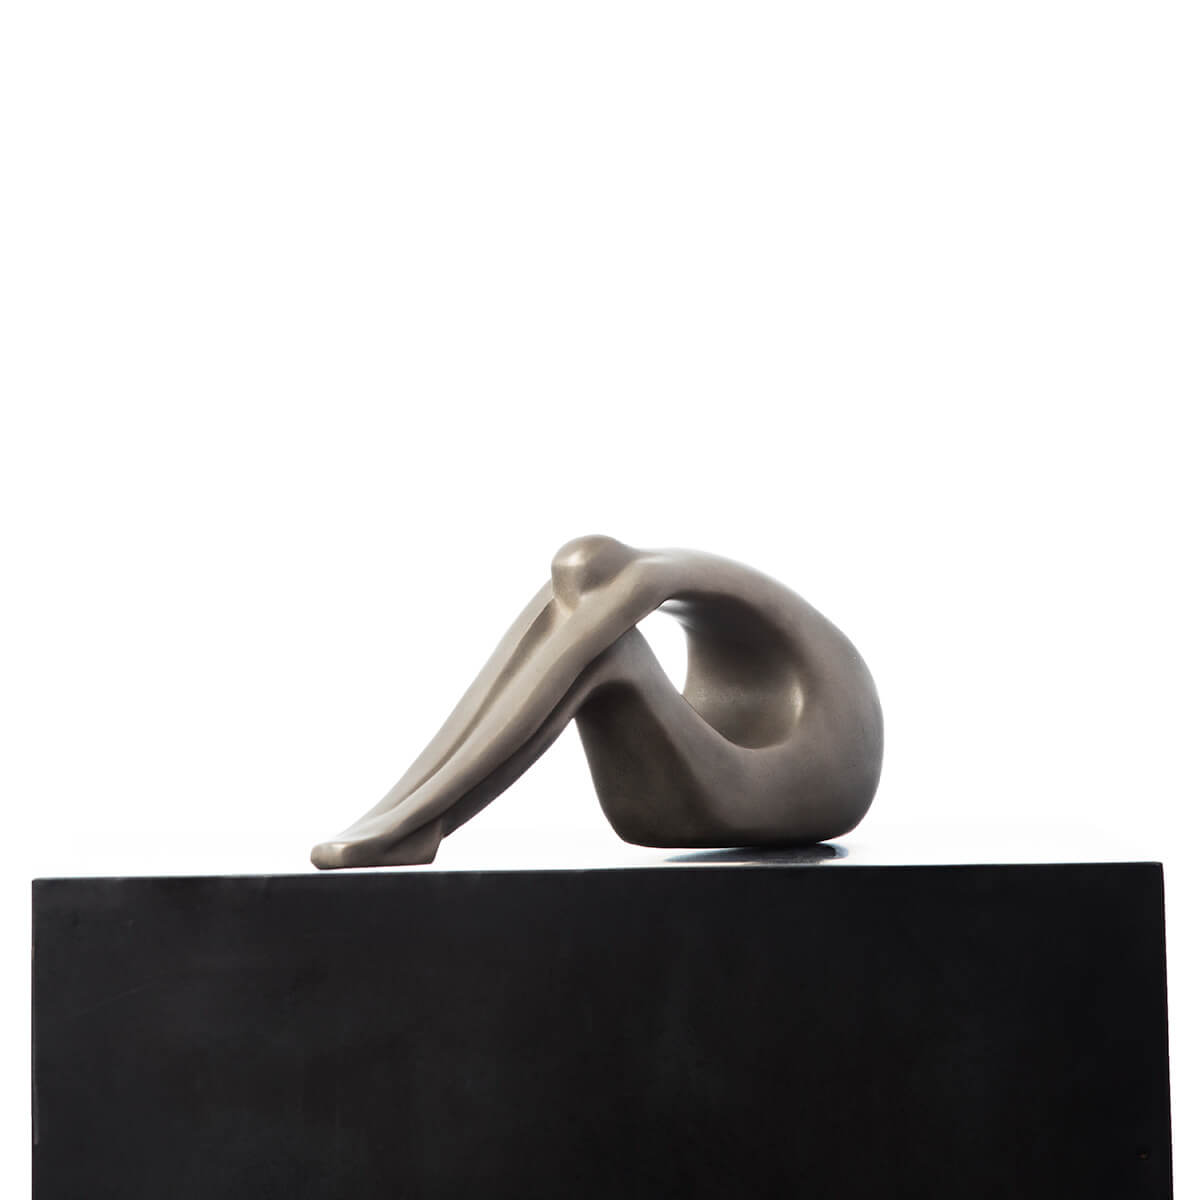 Robert-Helle-Sculpture-Gallery-Abstract-Pose-2-1200x1200